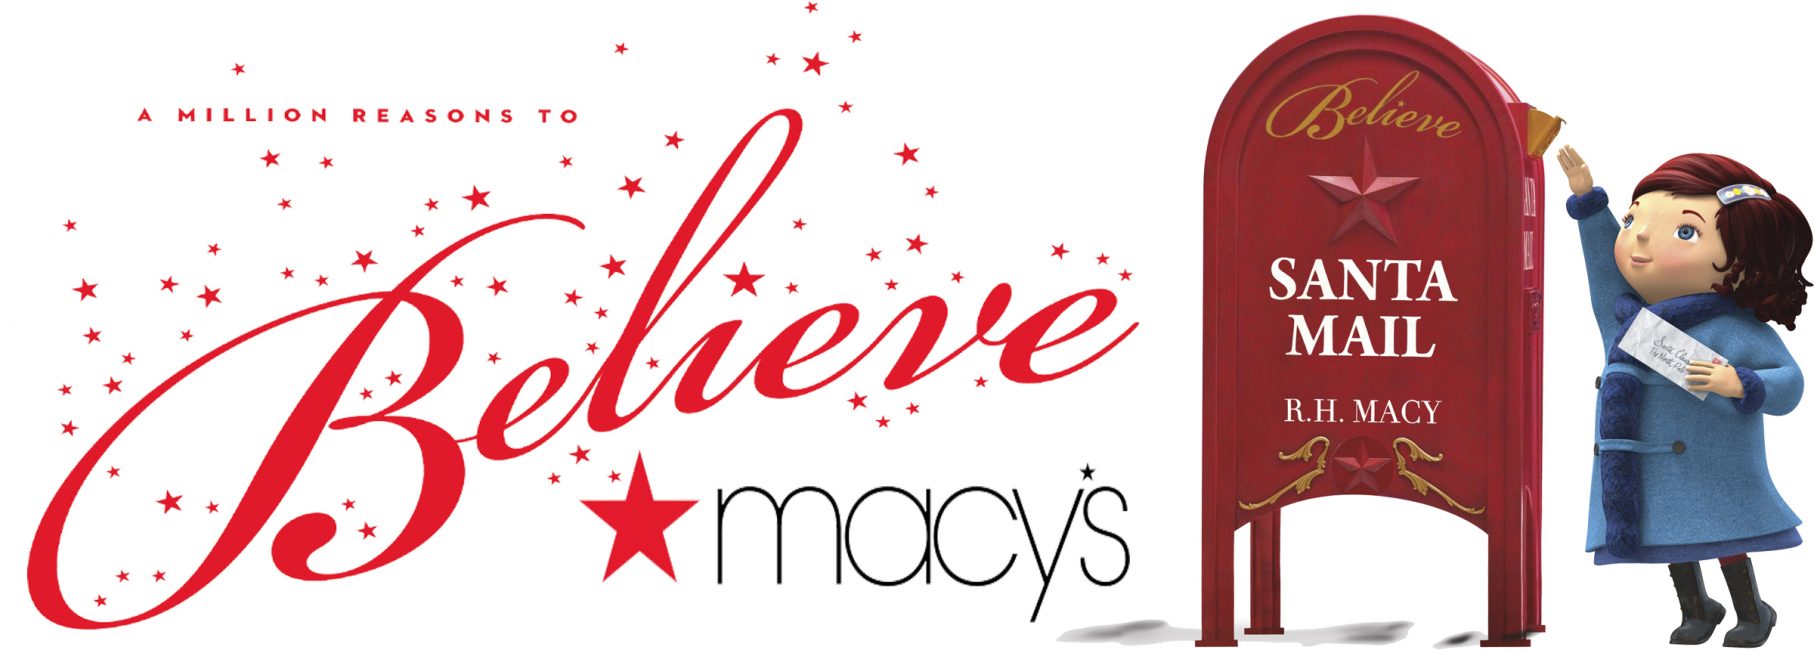 Macy's Believe Campaign Launch Holyoke Mall